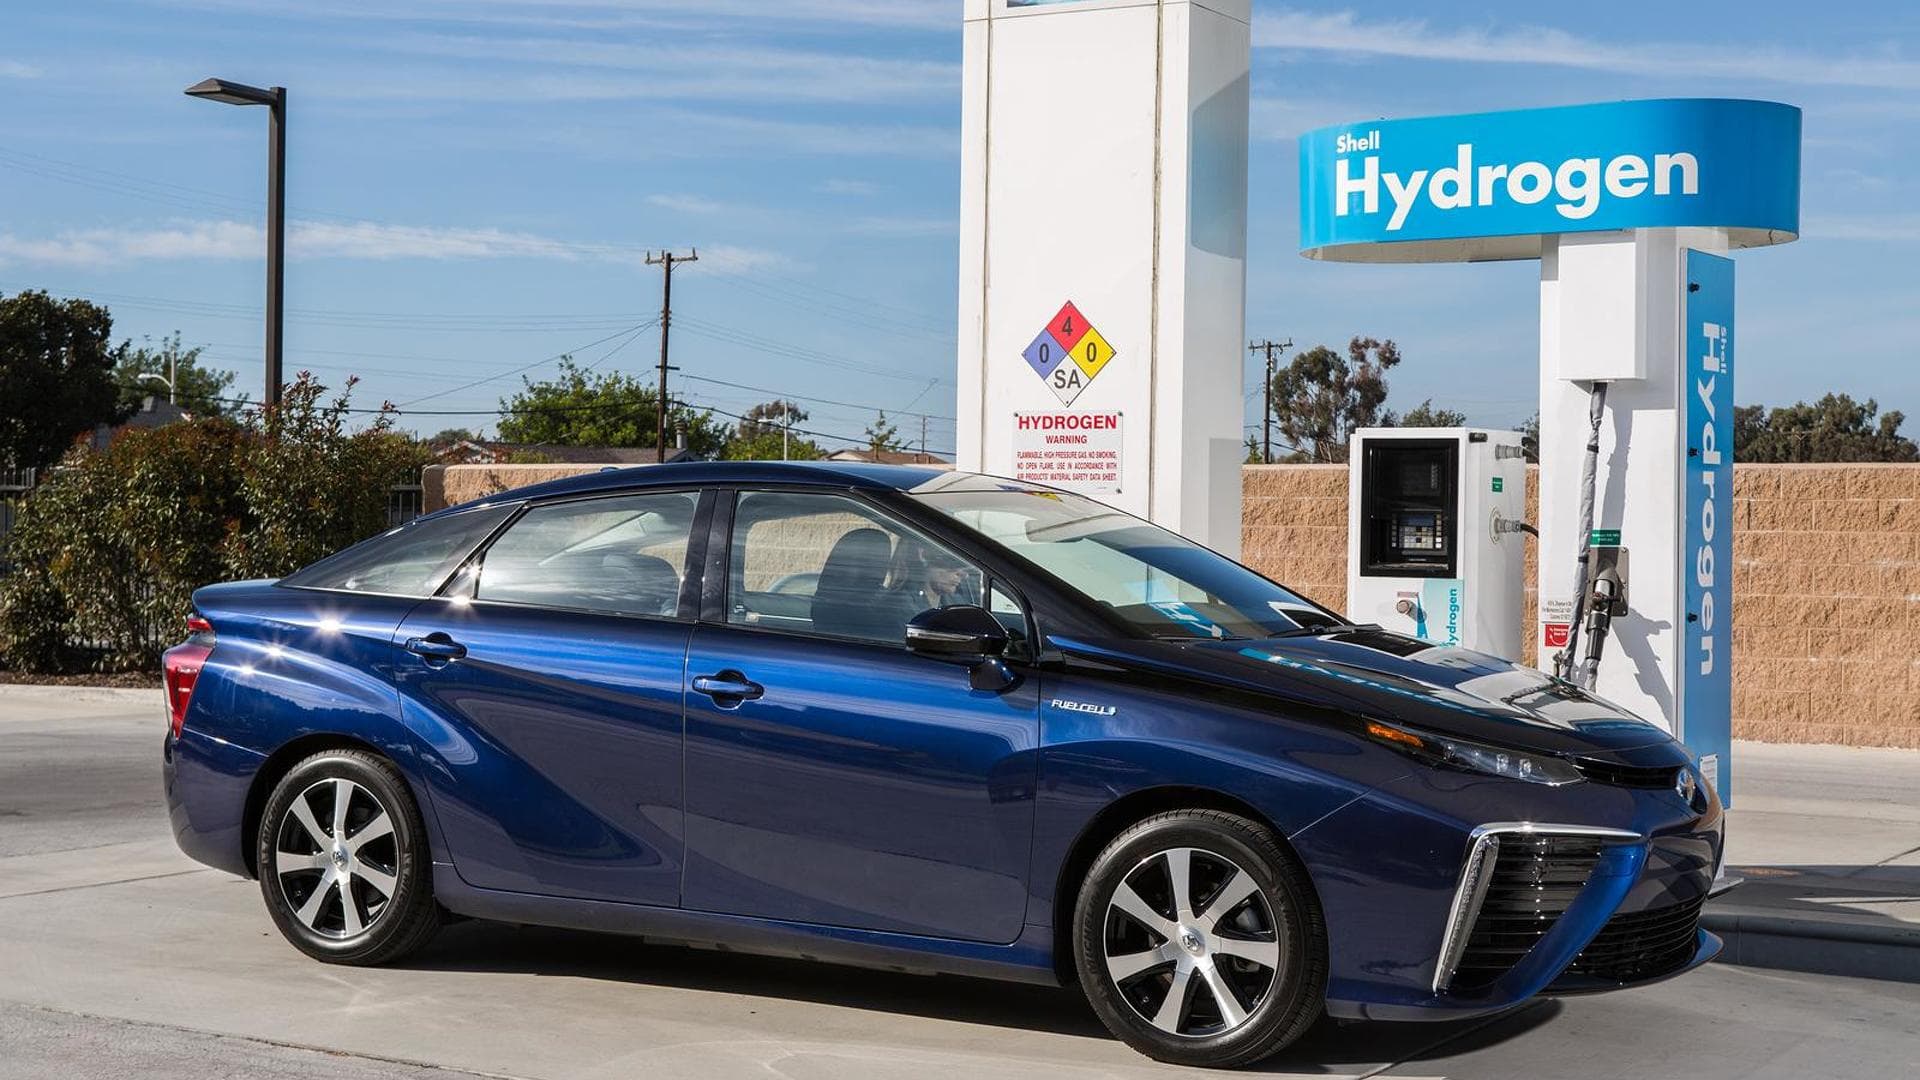 Despite Electric Car Developments, Toyota Sticking With Hydrogen Fuel Cells